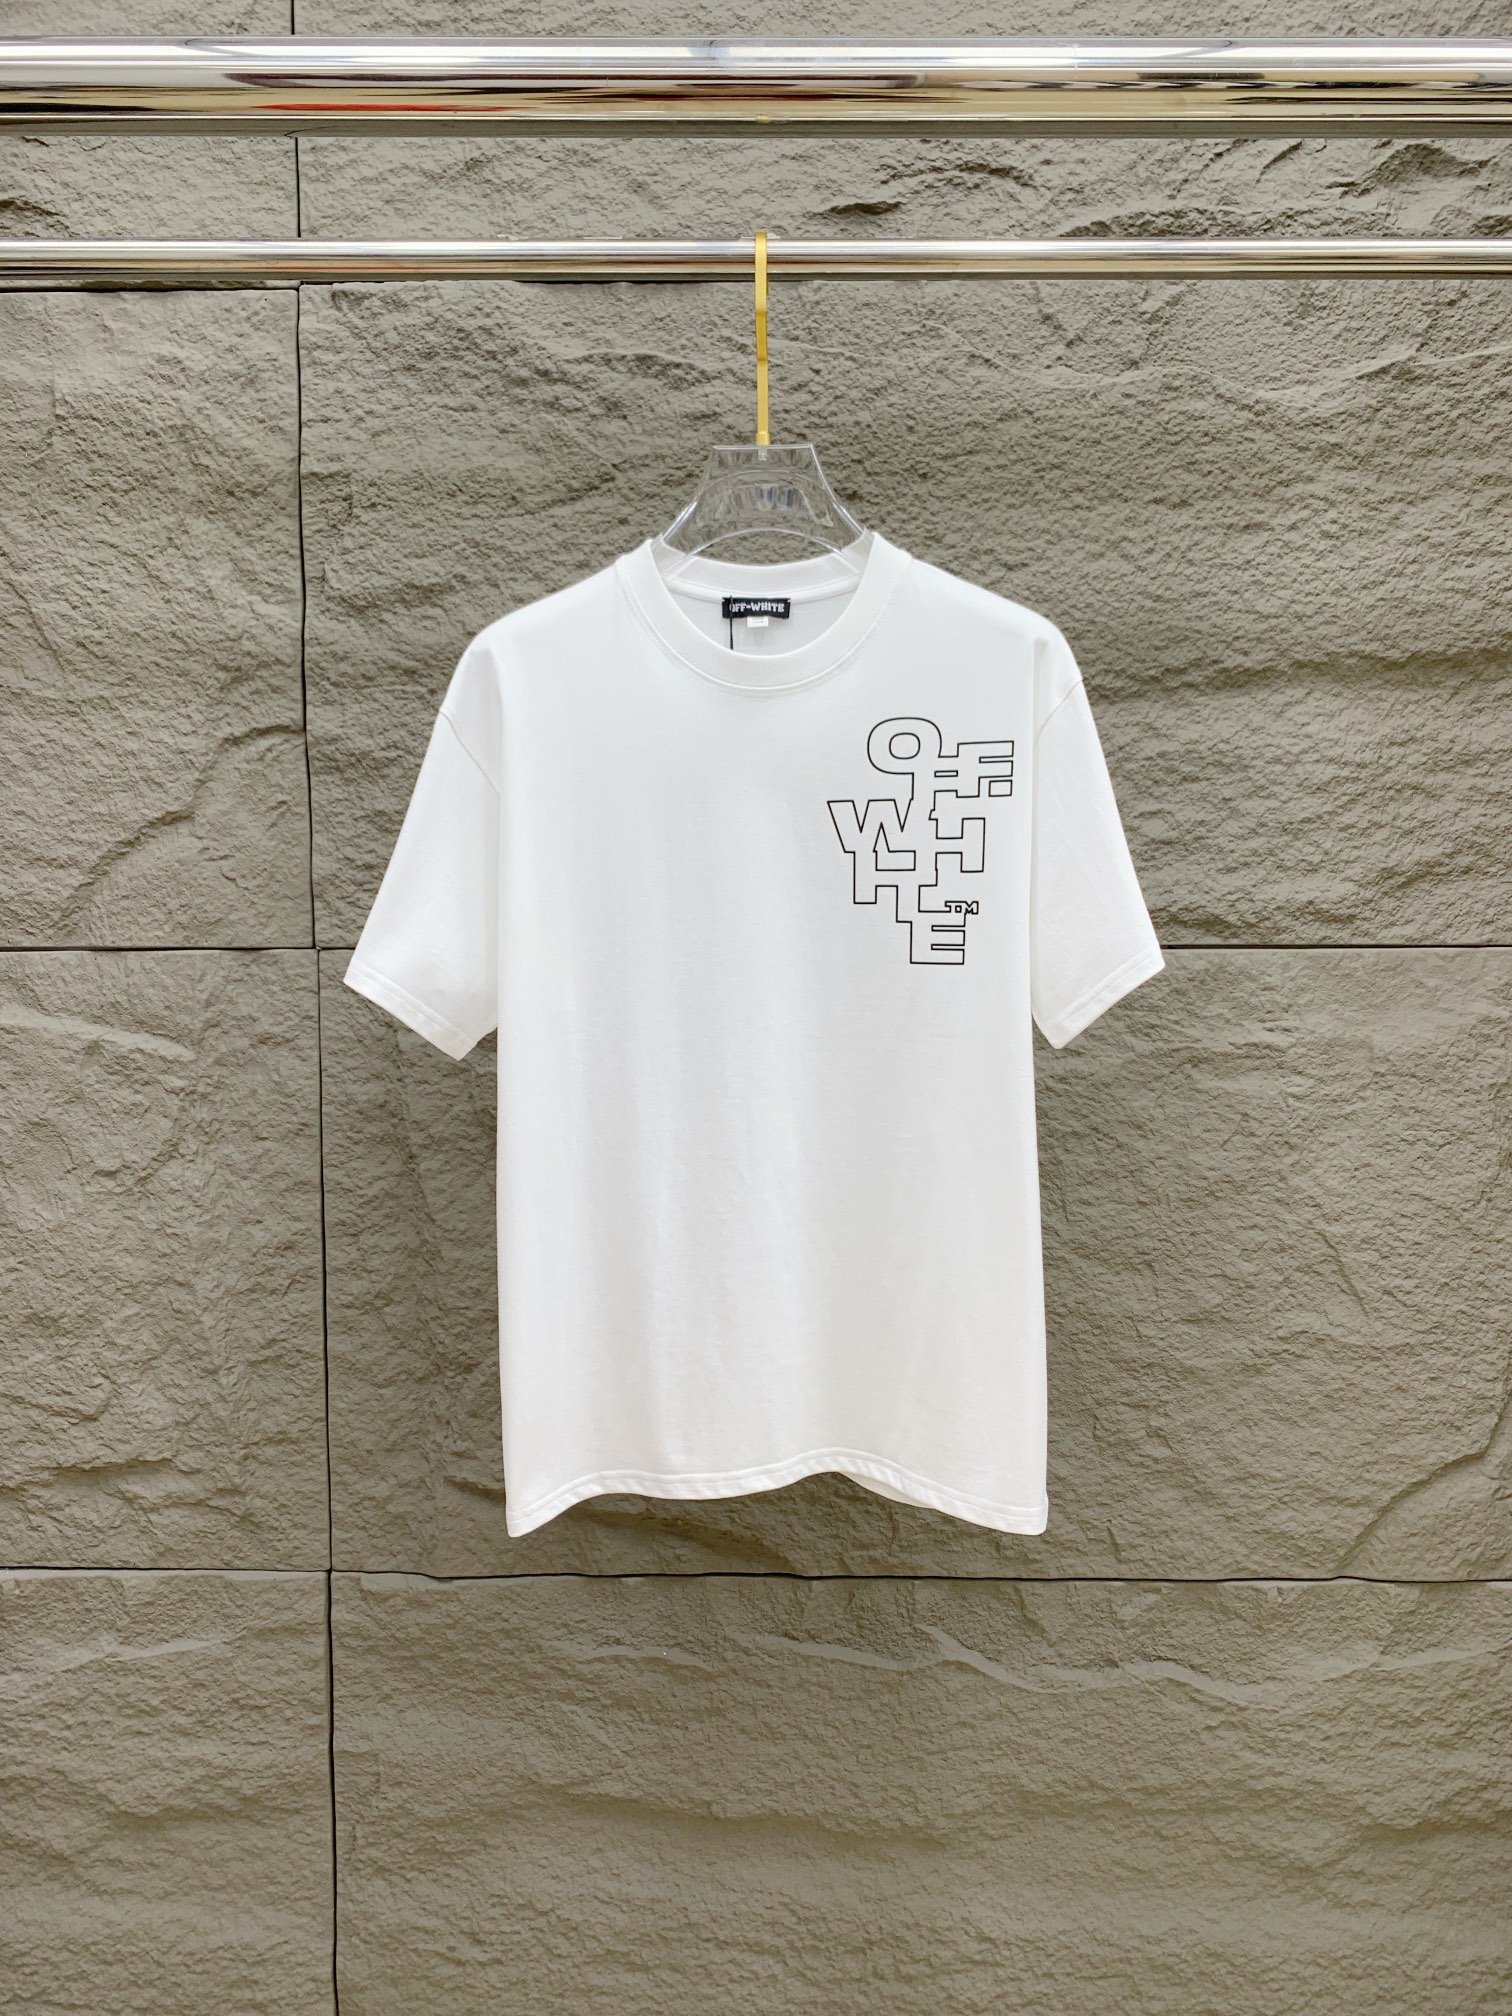 Fendi Top
 Clothing T-Shirt White Printing Cotton Fashion Short Sleeve